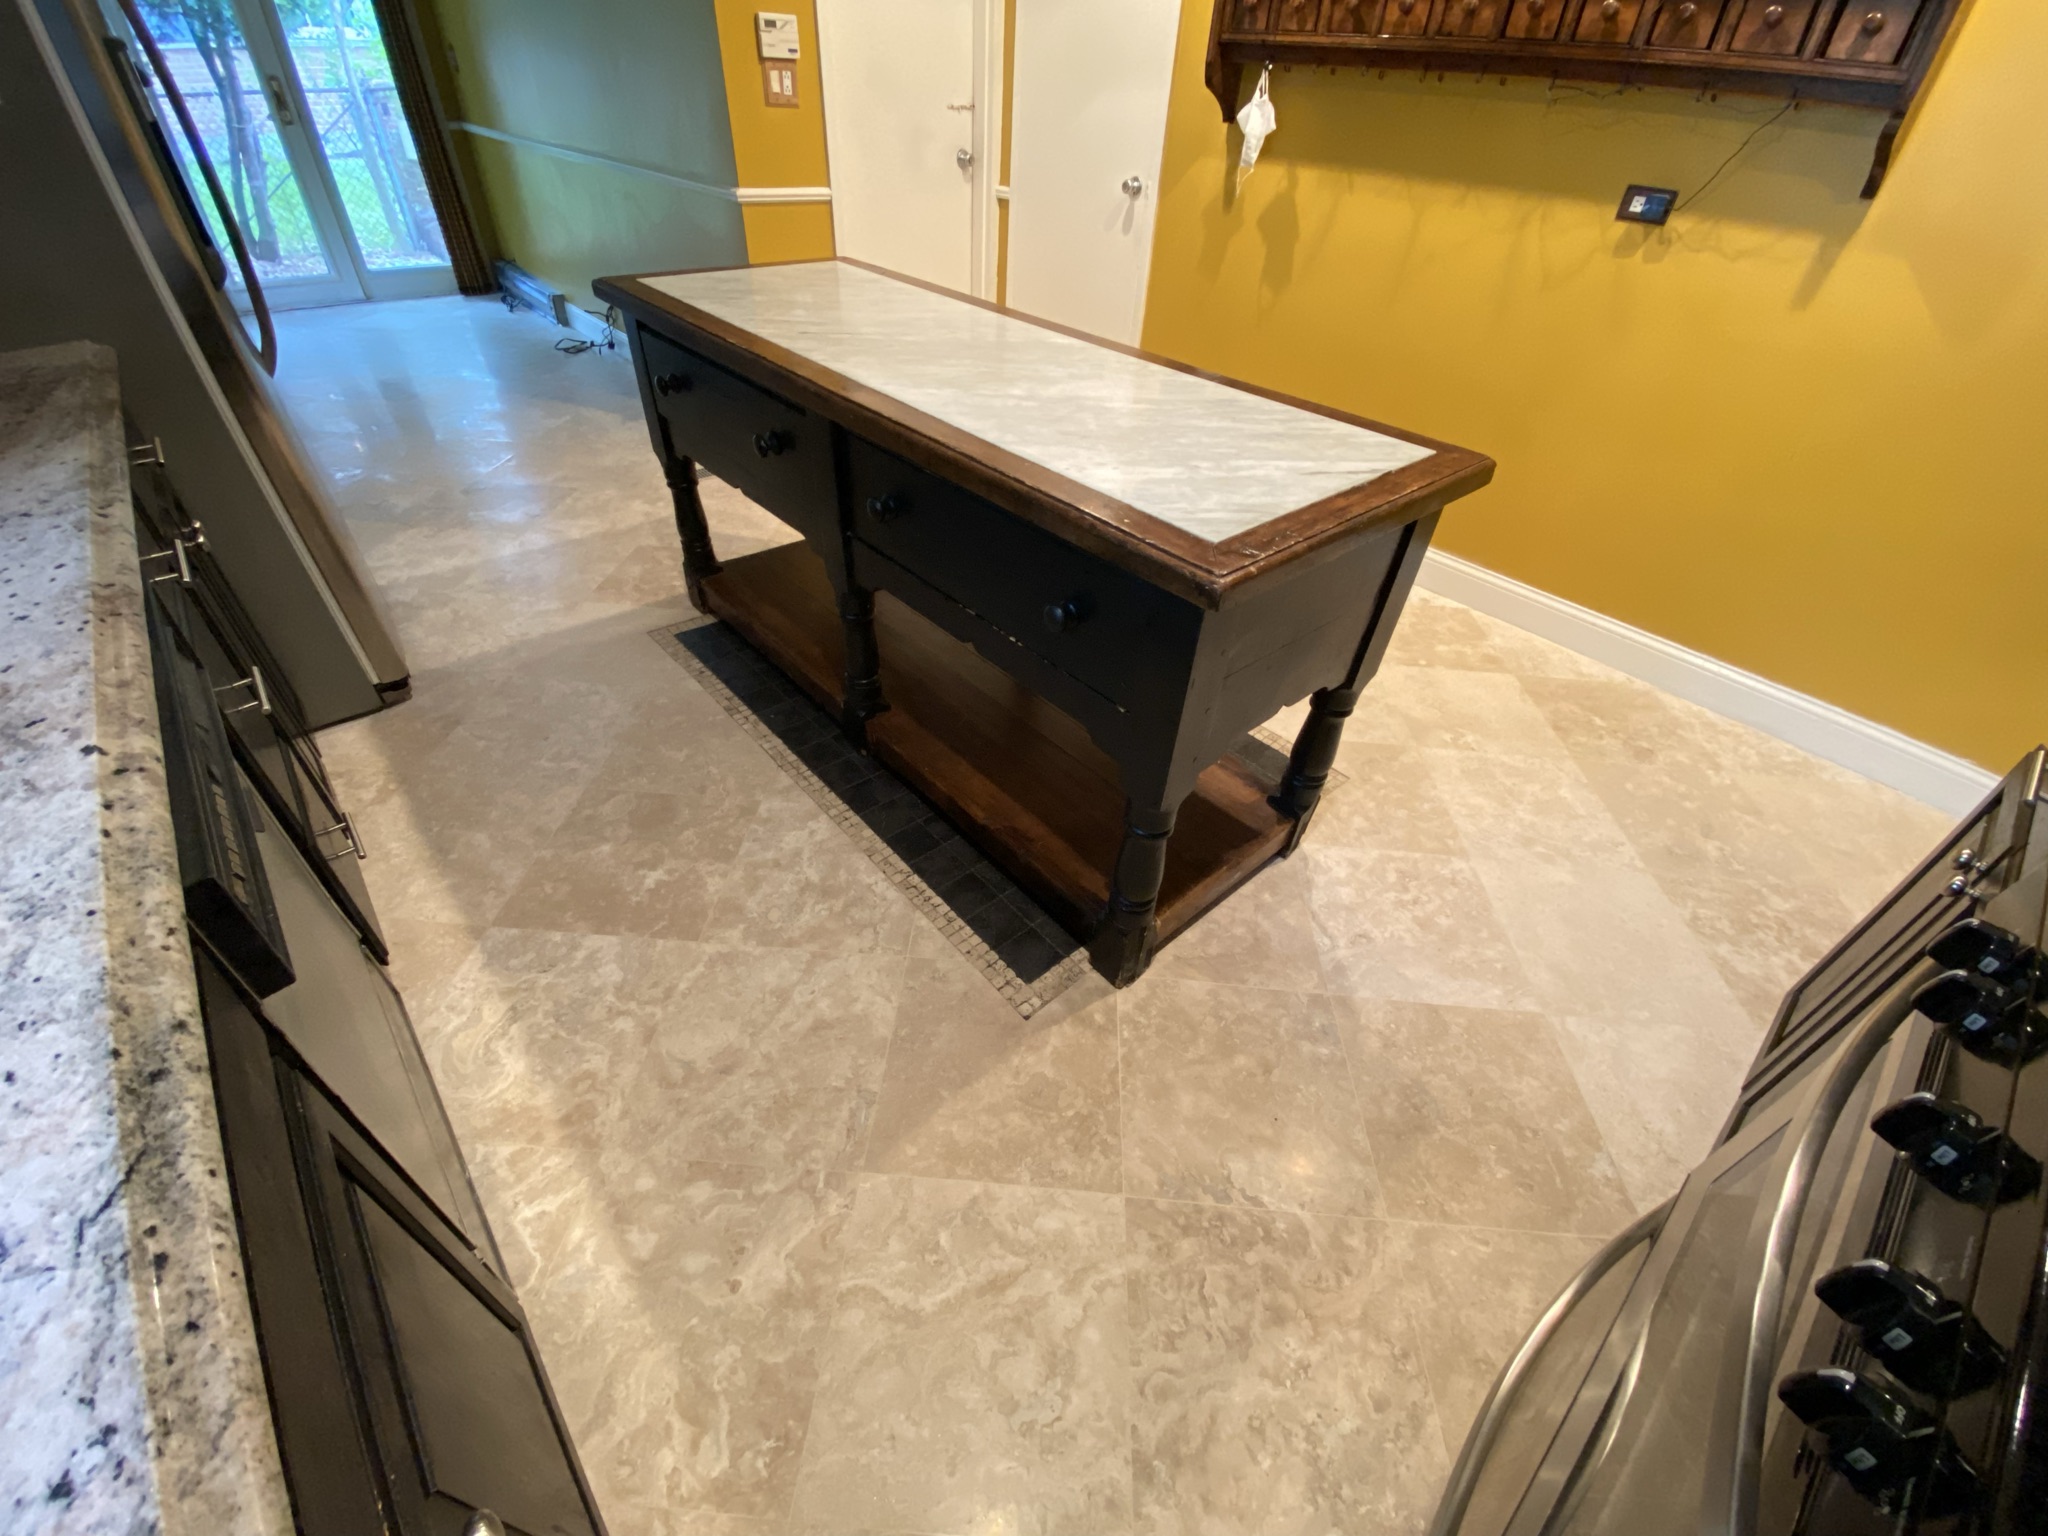 8+ Refinishing System AKA Seamless Floor – travertine tile lippage removal, epoxy grout, polishing